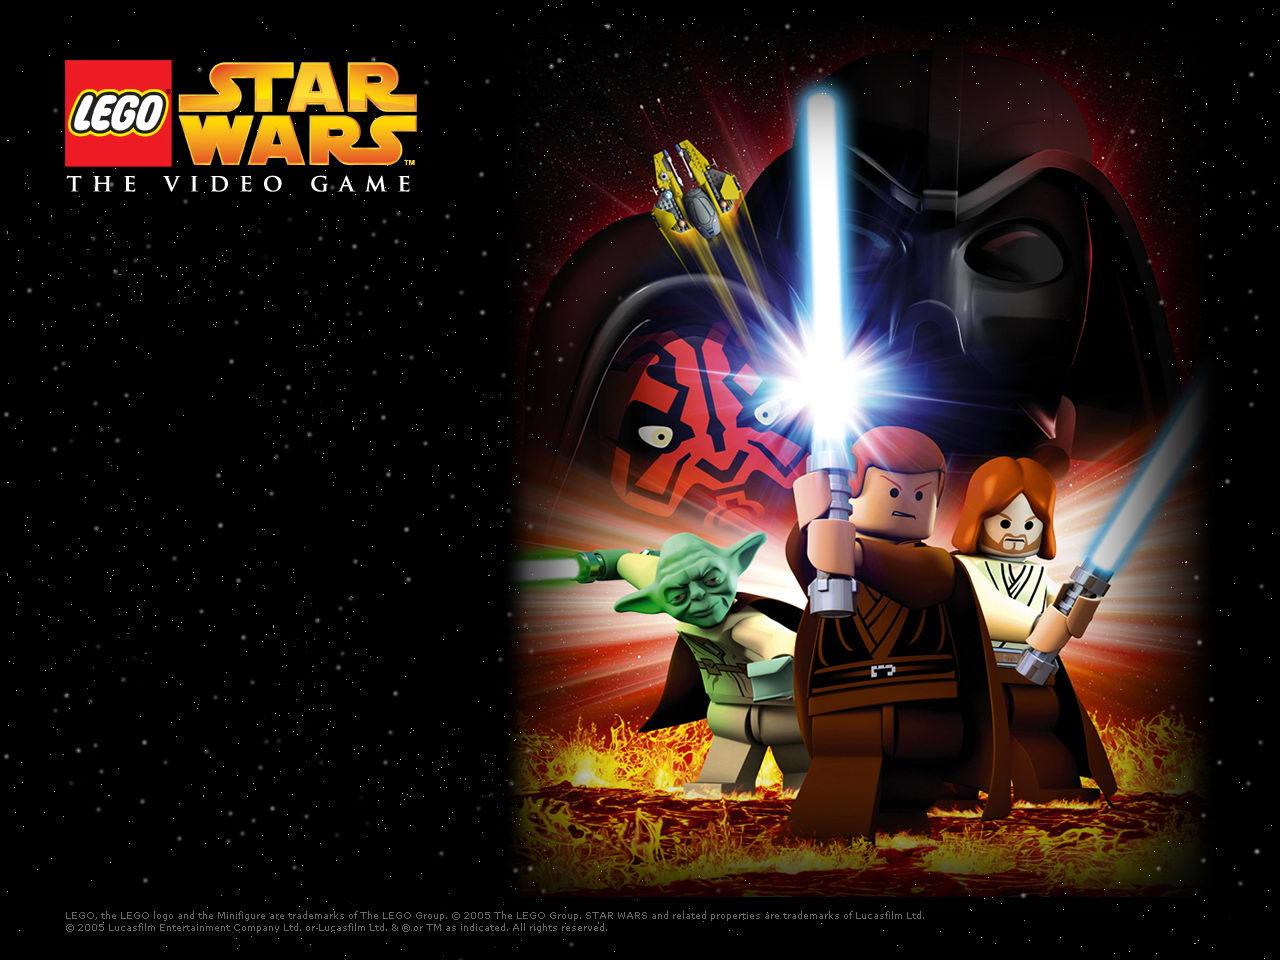 LEGO Star Wars Wallpaper